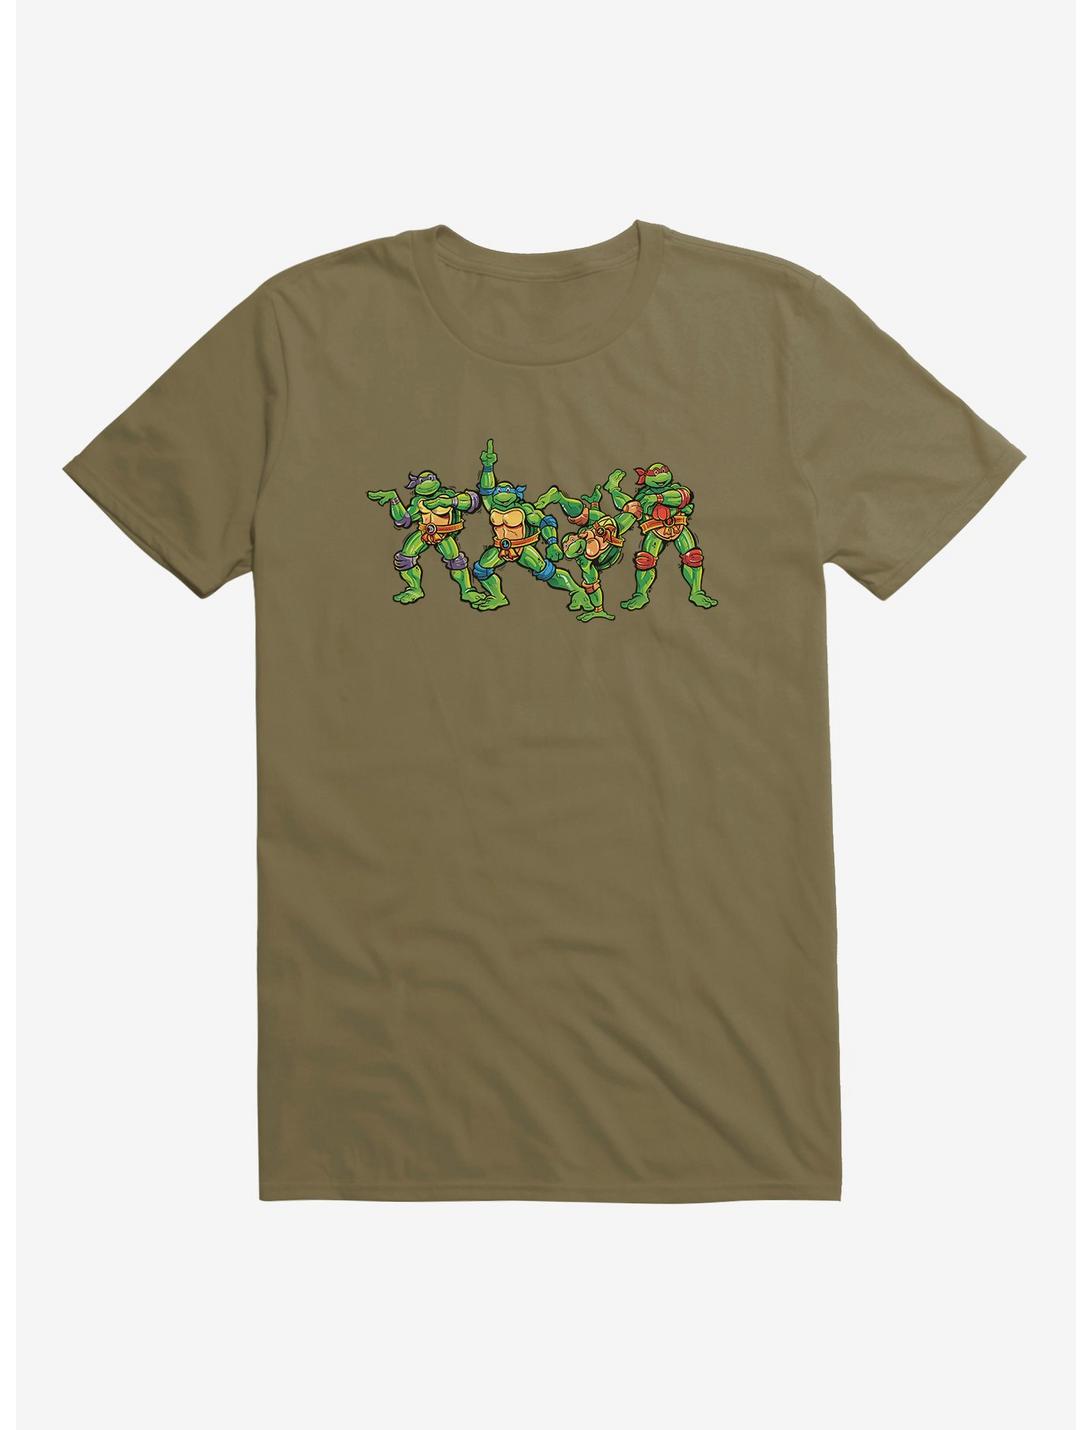 Teenage Mutant Ninja Turtles Group Dance Poses Green T-Shirt, FOREST GREEN, hi-res